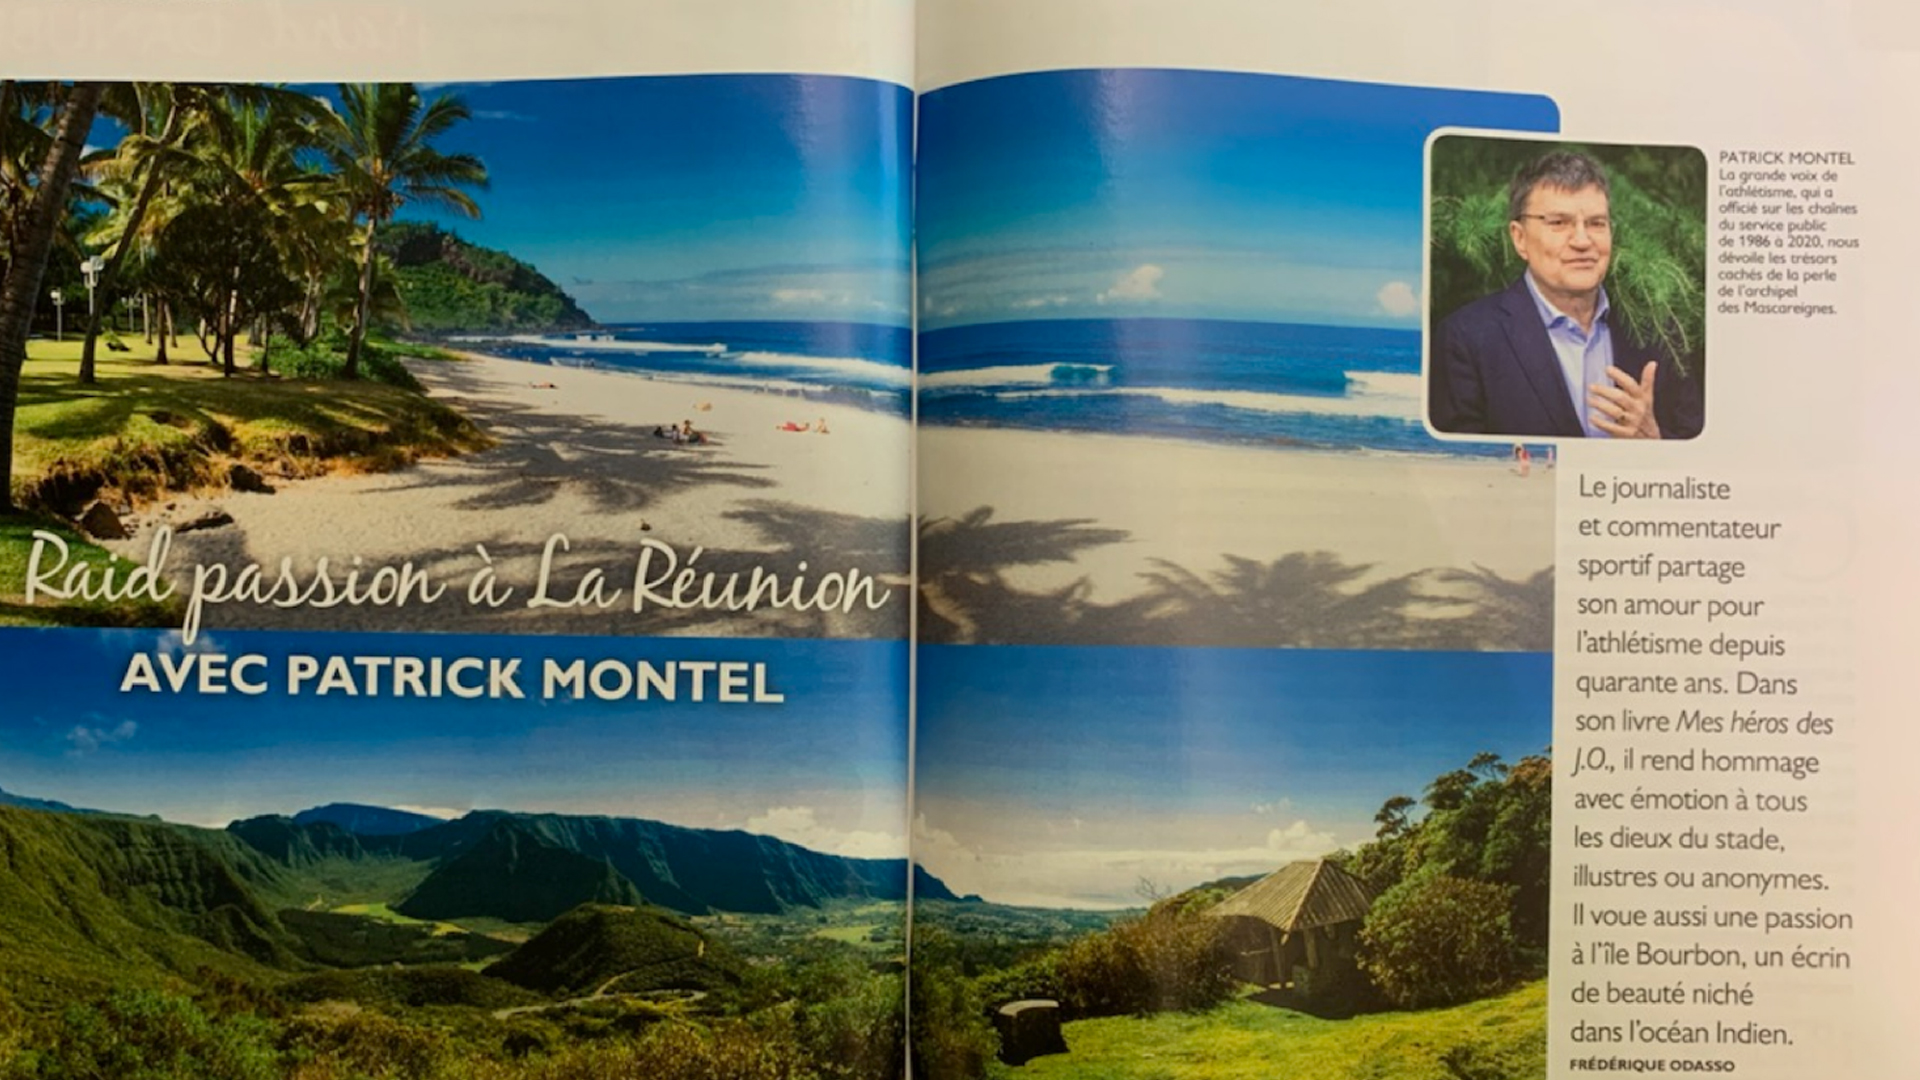 Patrick Montel met La Réunion en lèr